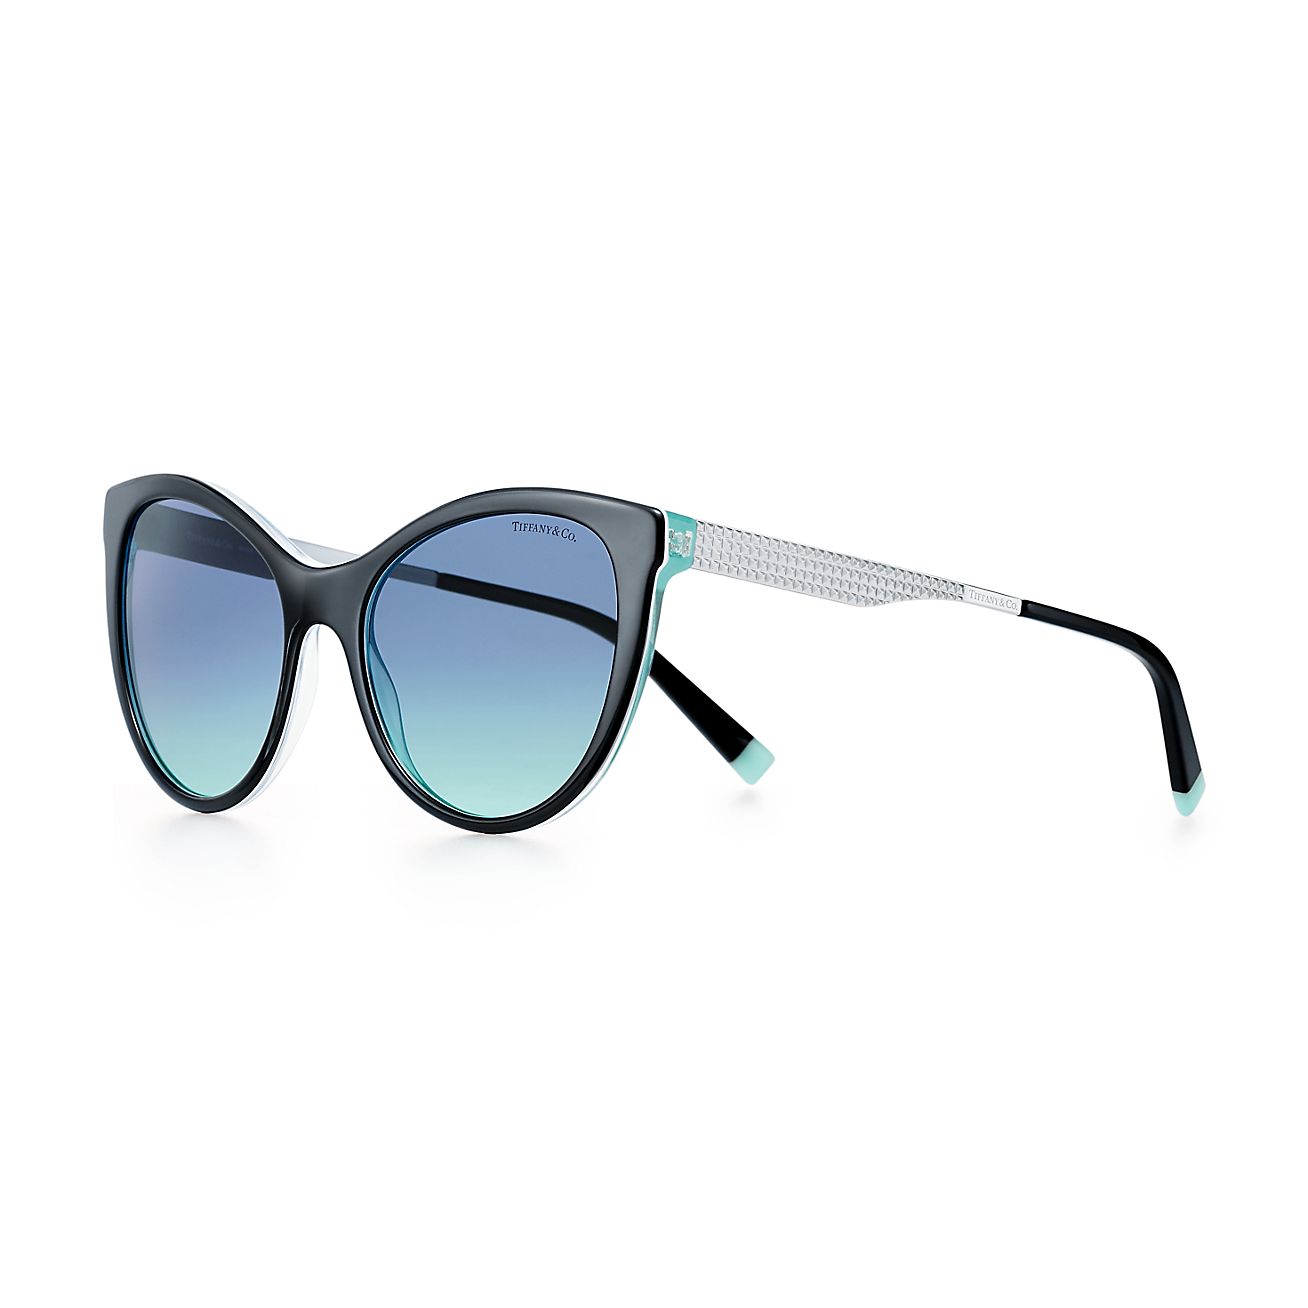 tiffany inspired sunglasses